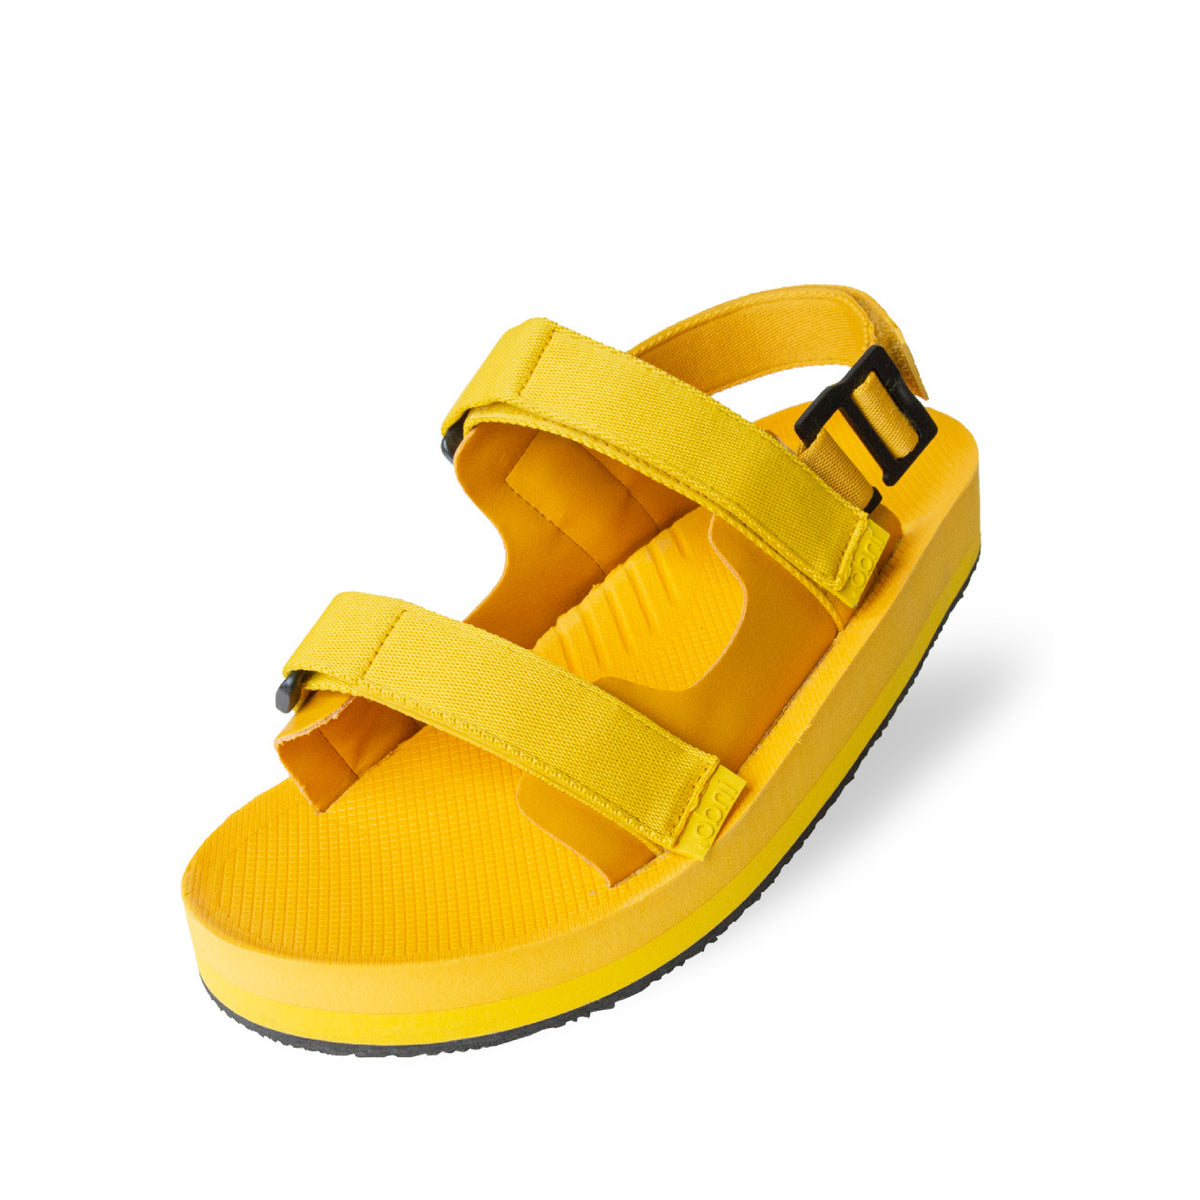 Women’s Sandals Adventurer - Honey/Mustard